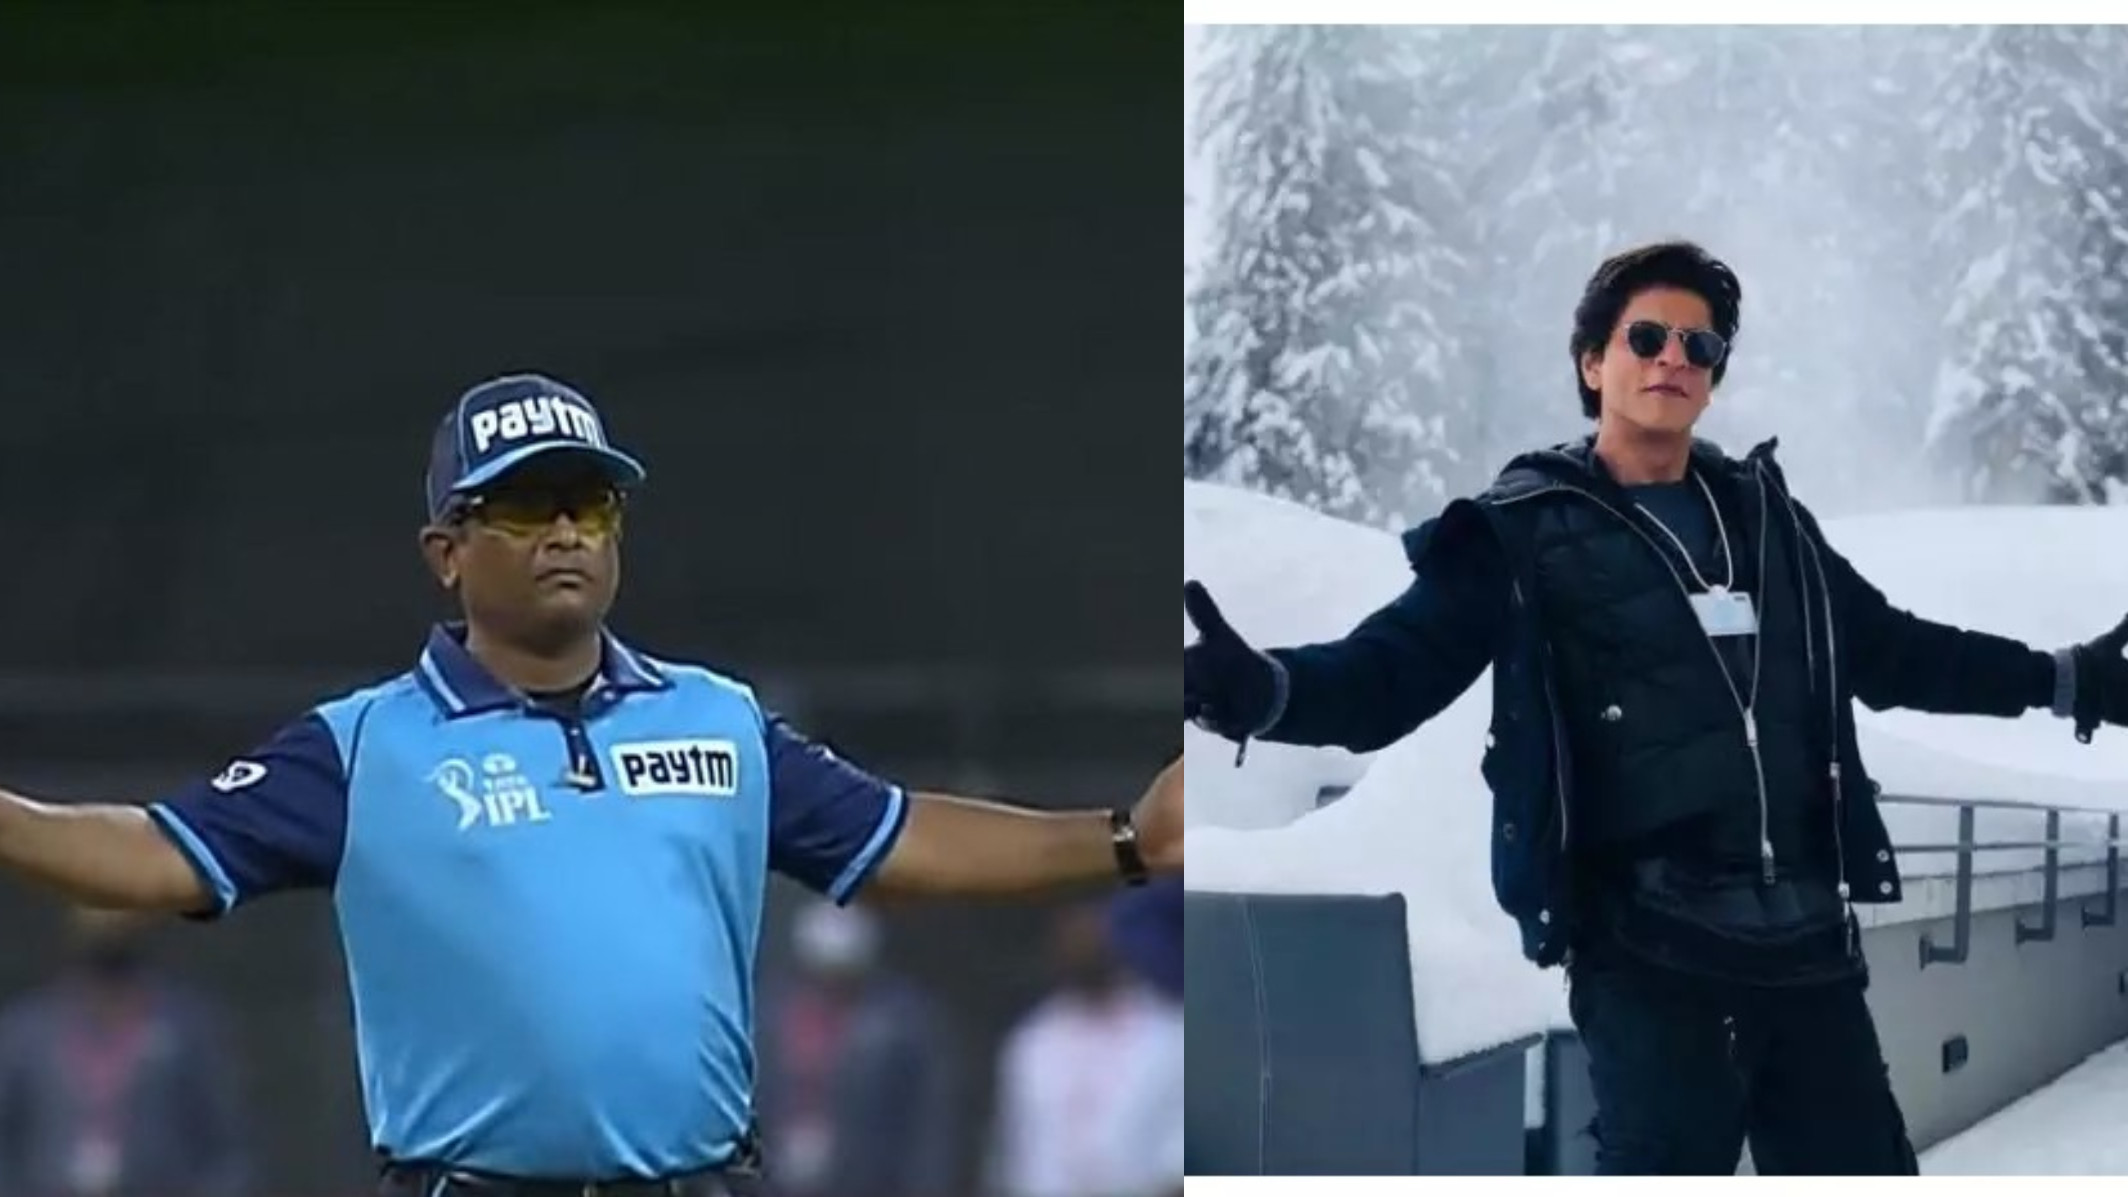 IPL 2022: 'Umpire is a fan of Shahrukh Khan'- Twitterati slam umpire's wide ball calls in penultimate over of KKR v RR clash